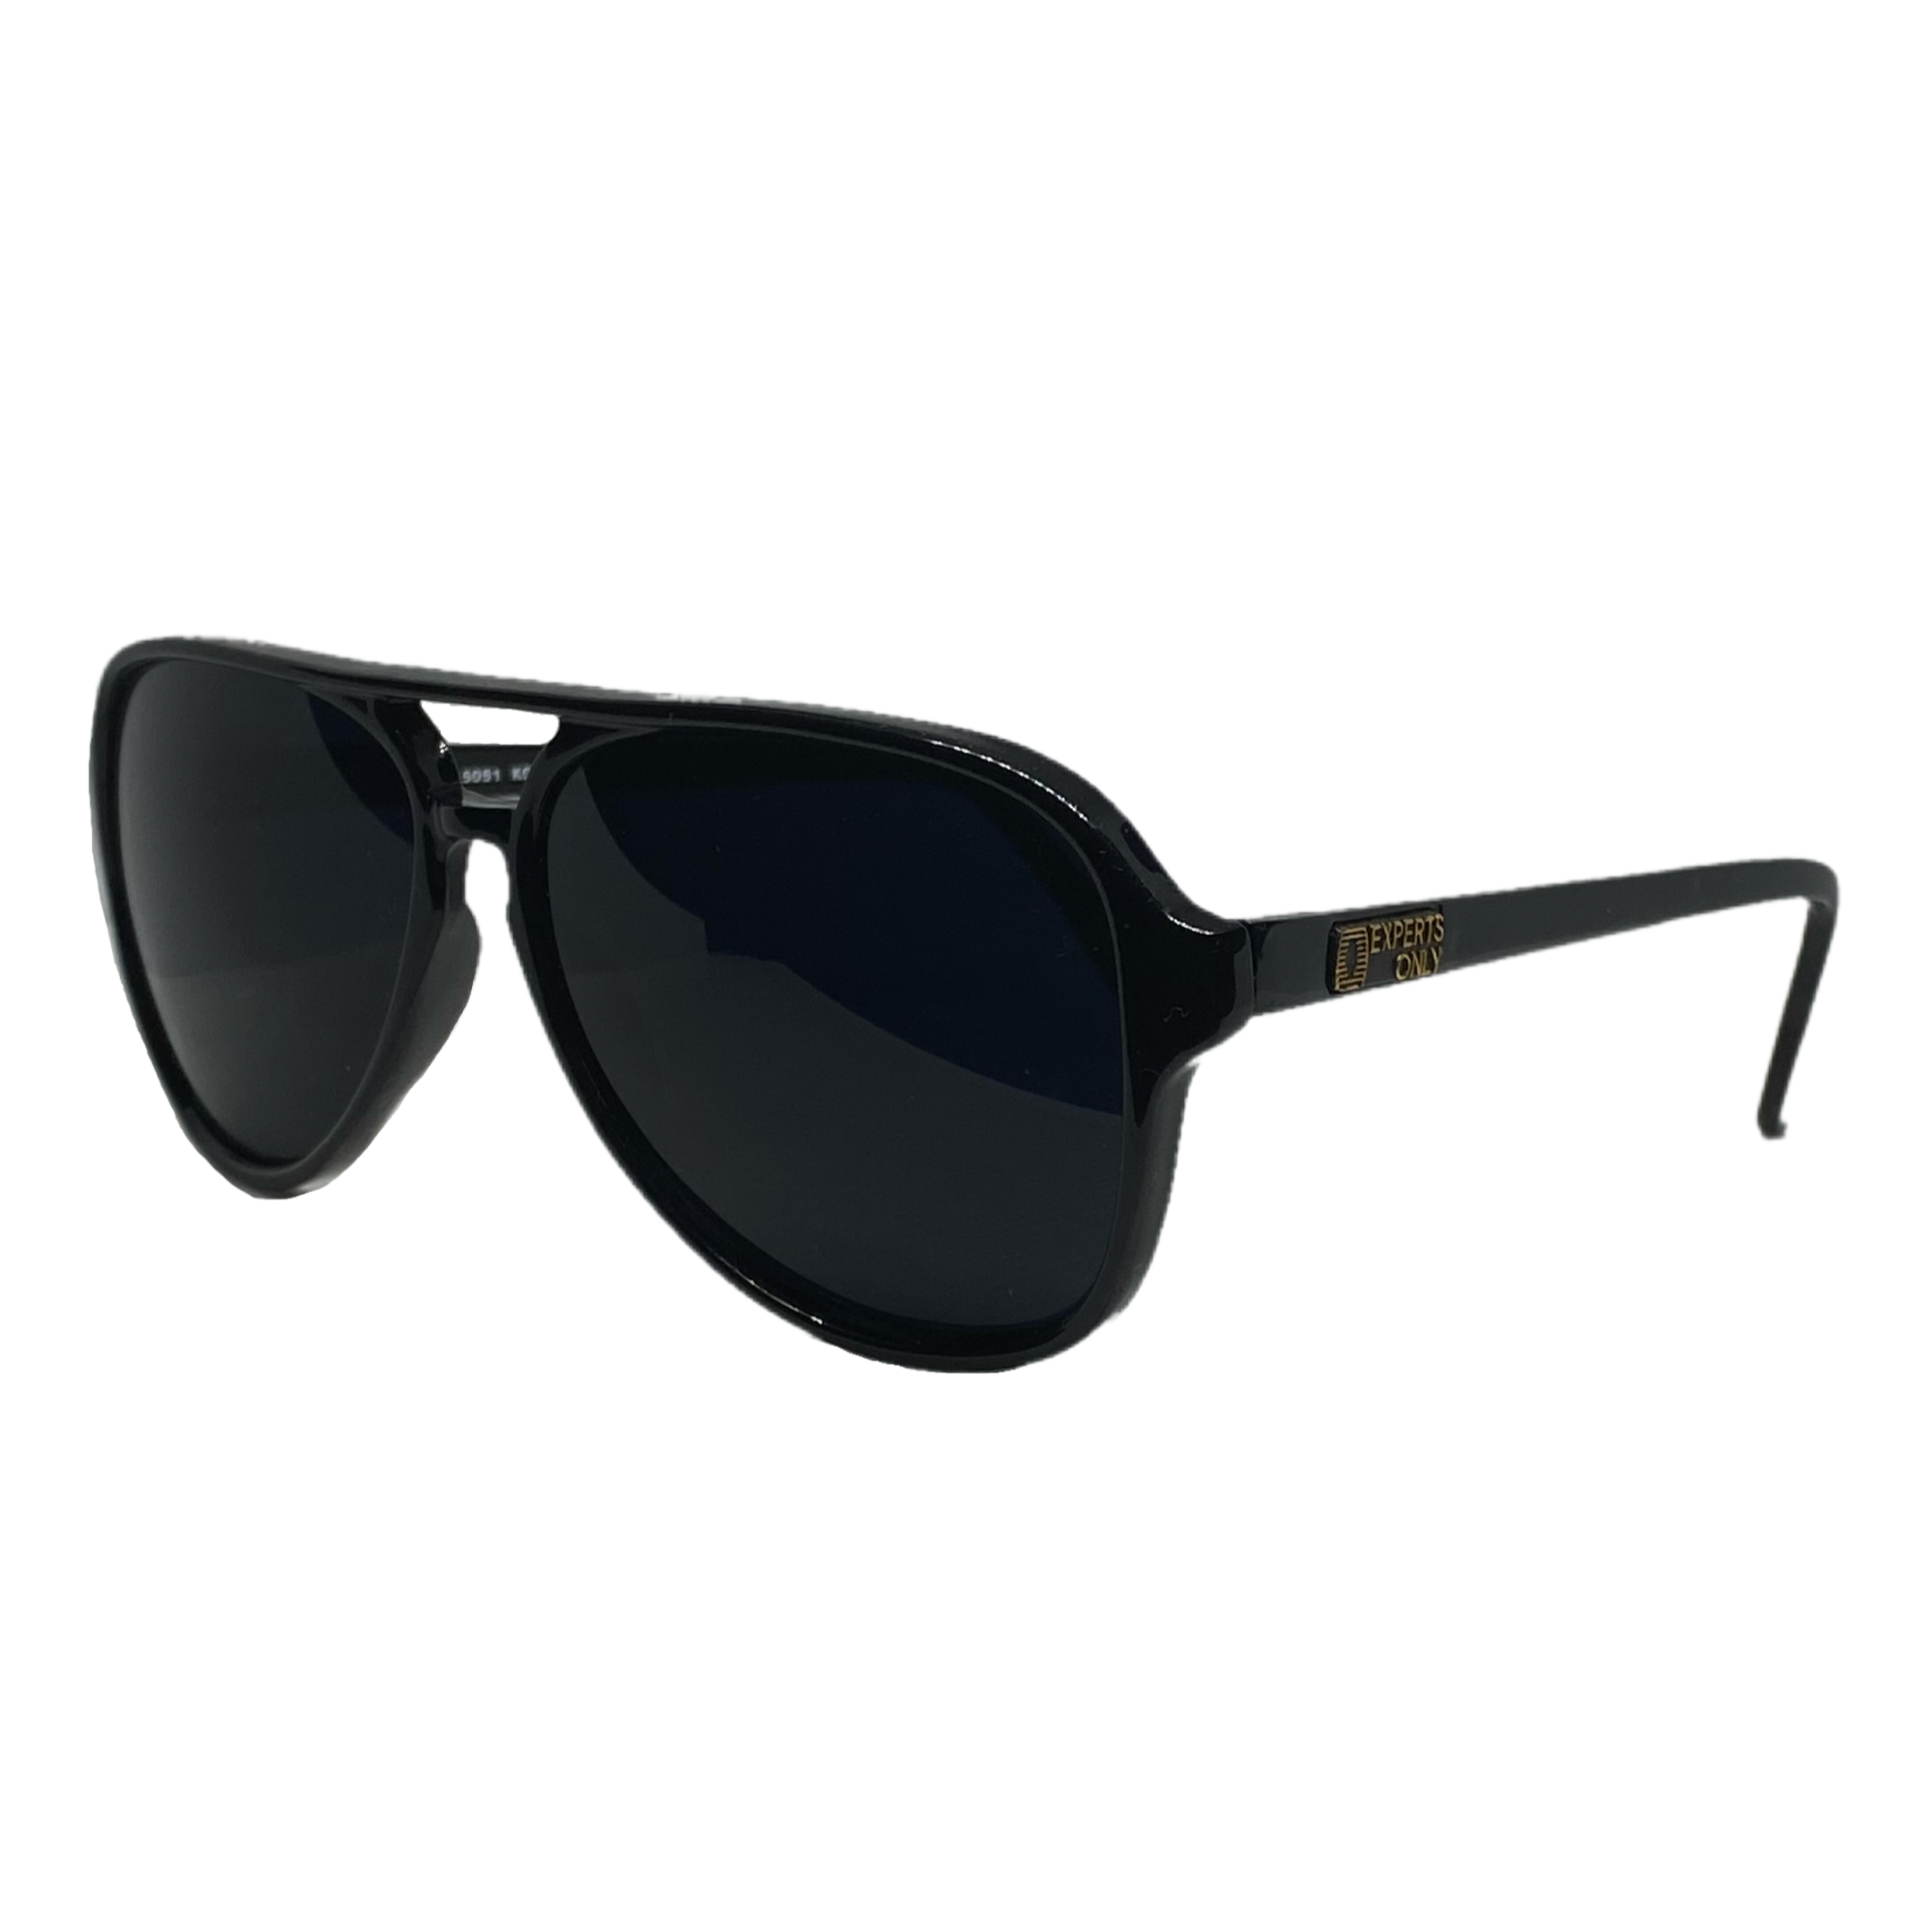 COLA Super Dark Classic Aviator Sunglasses